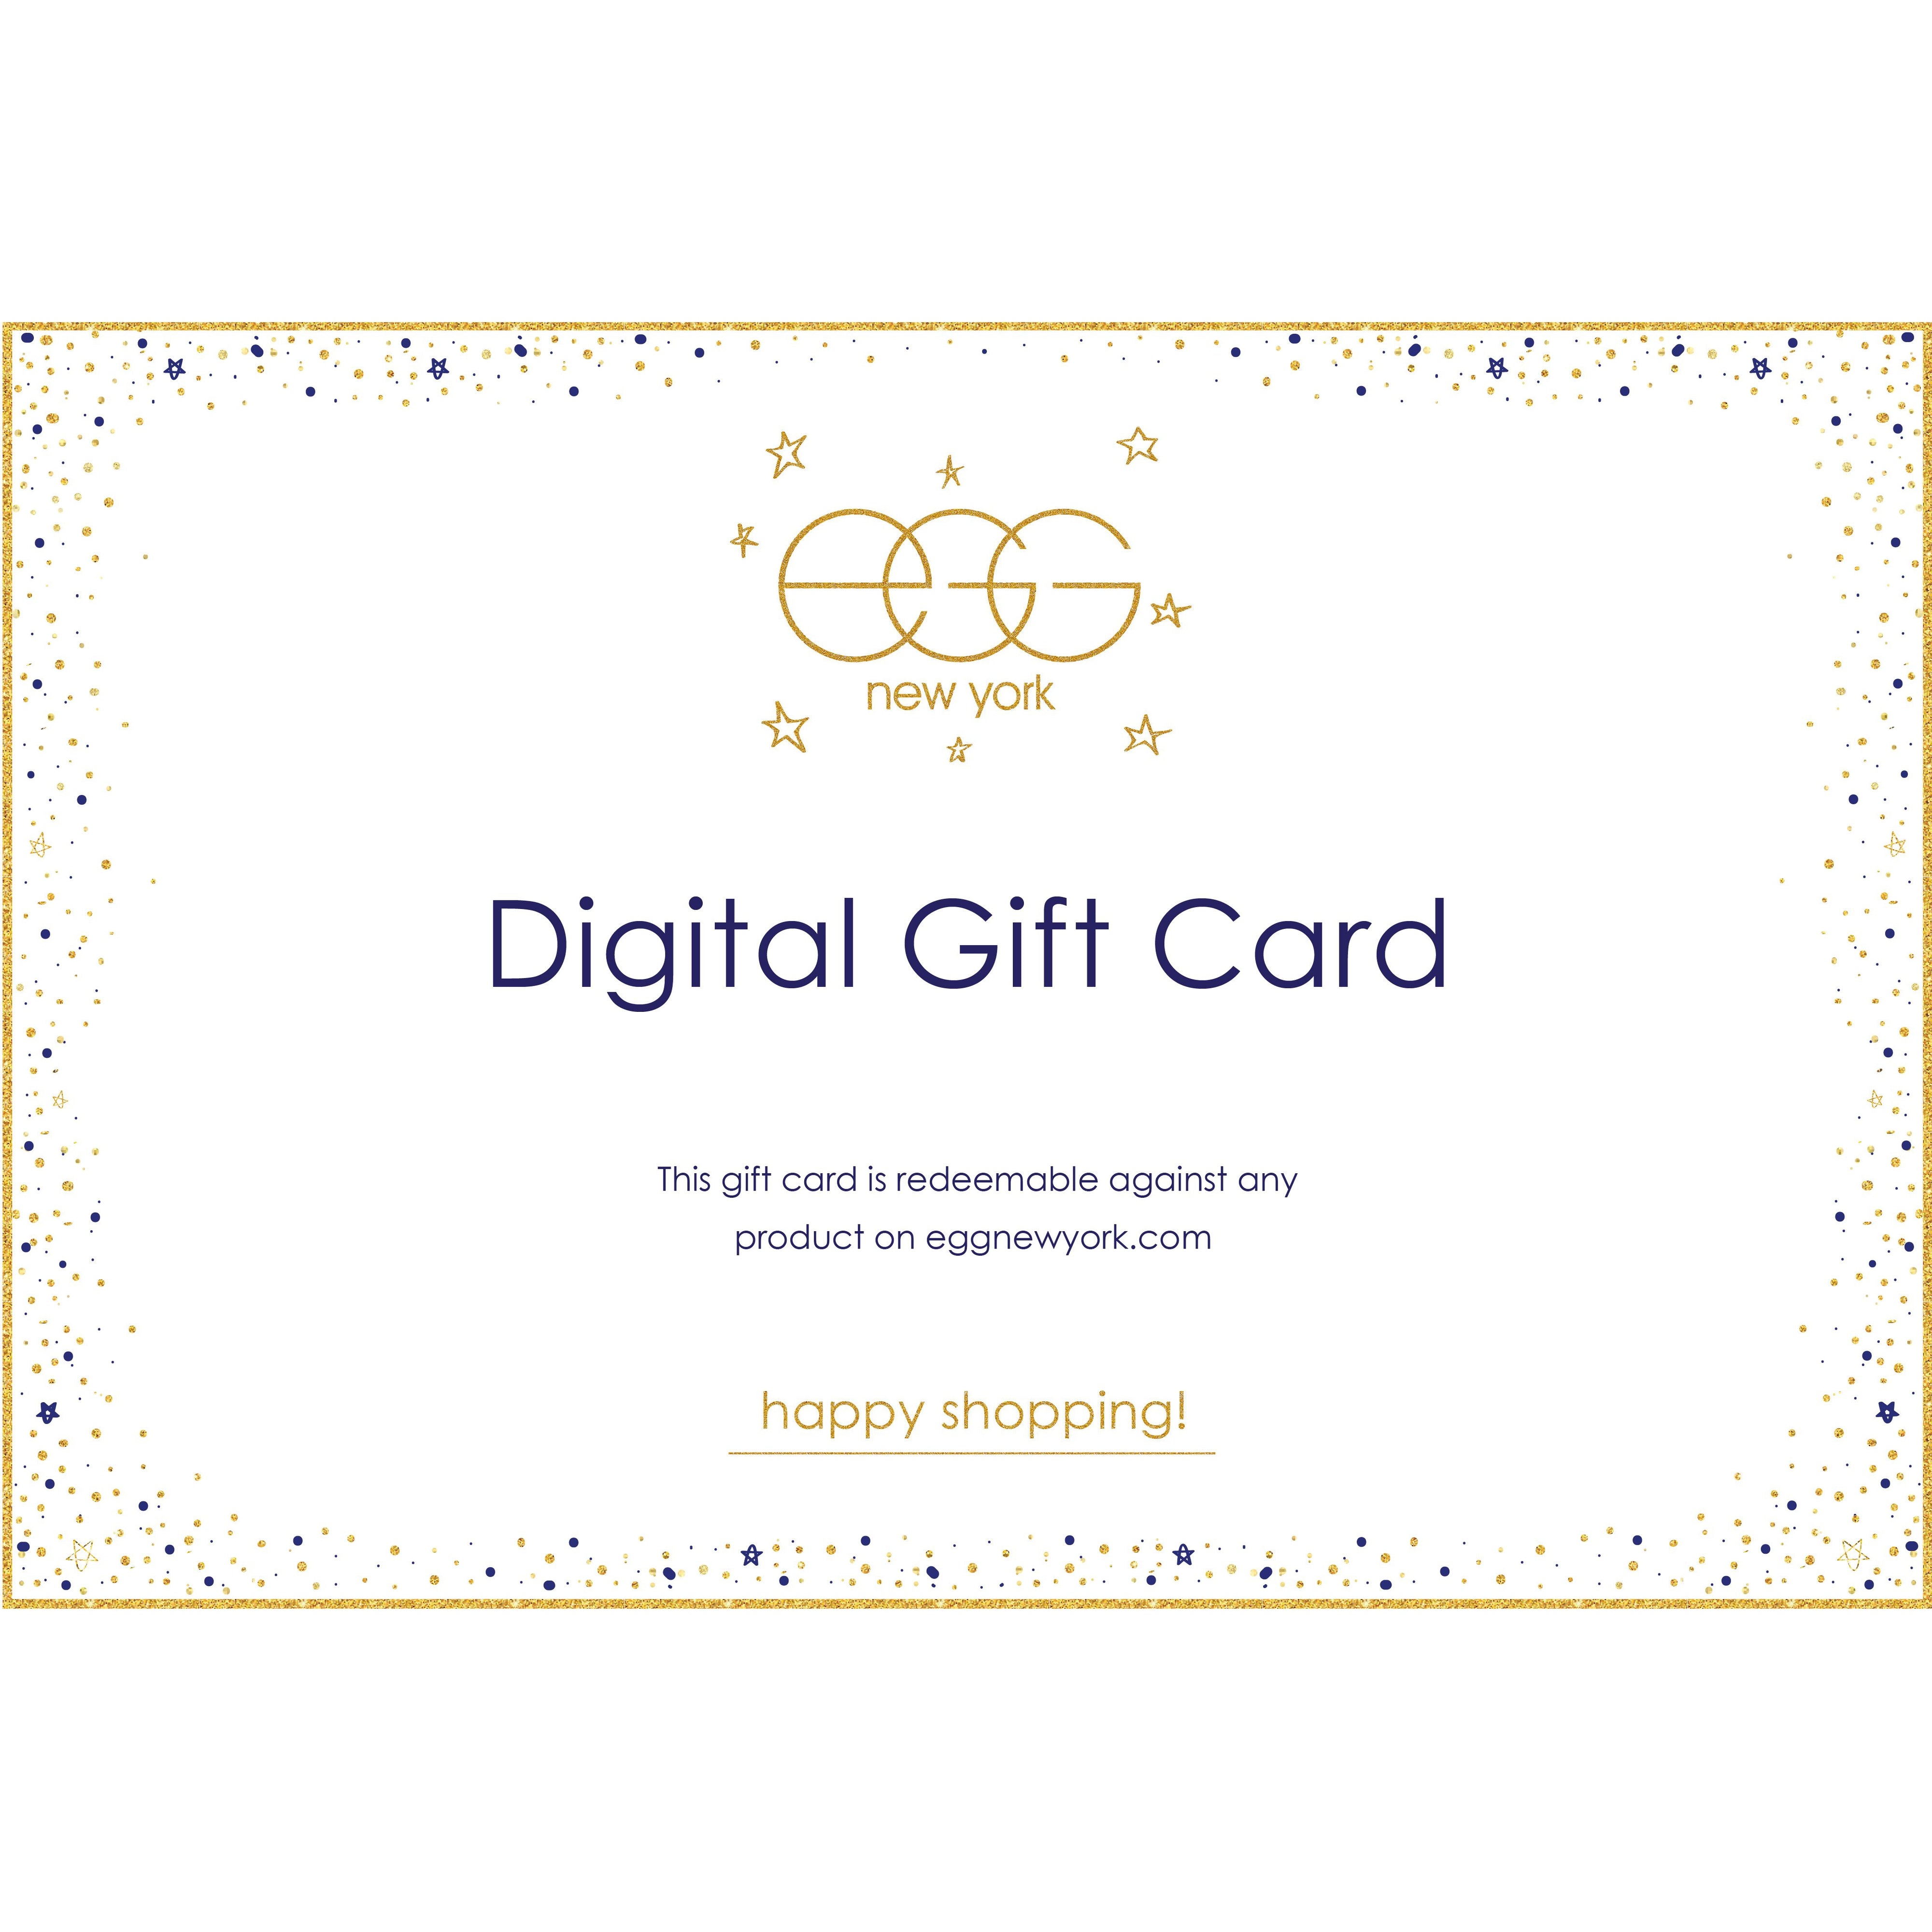 Digital Gift Card - Alder New York